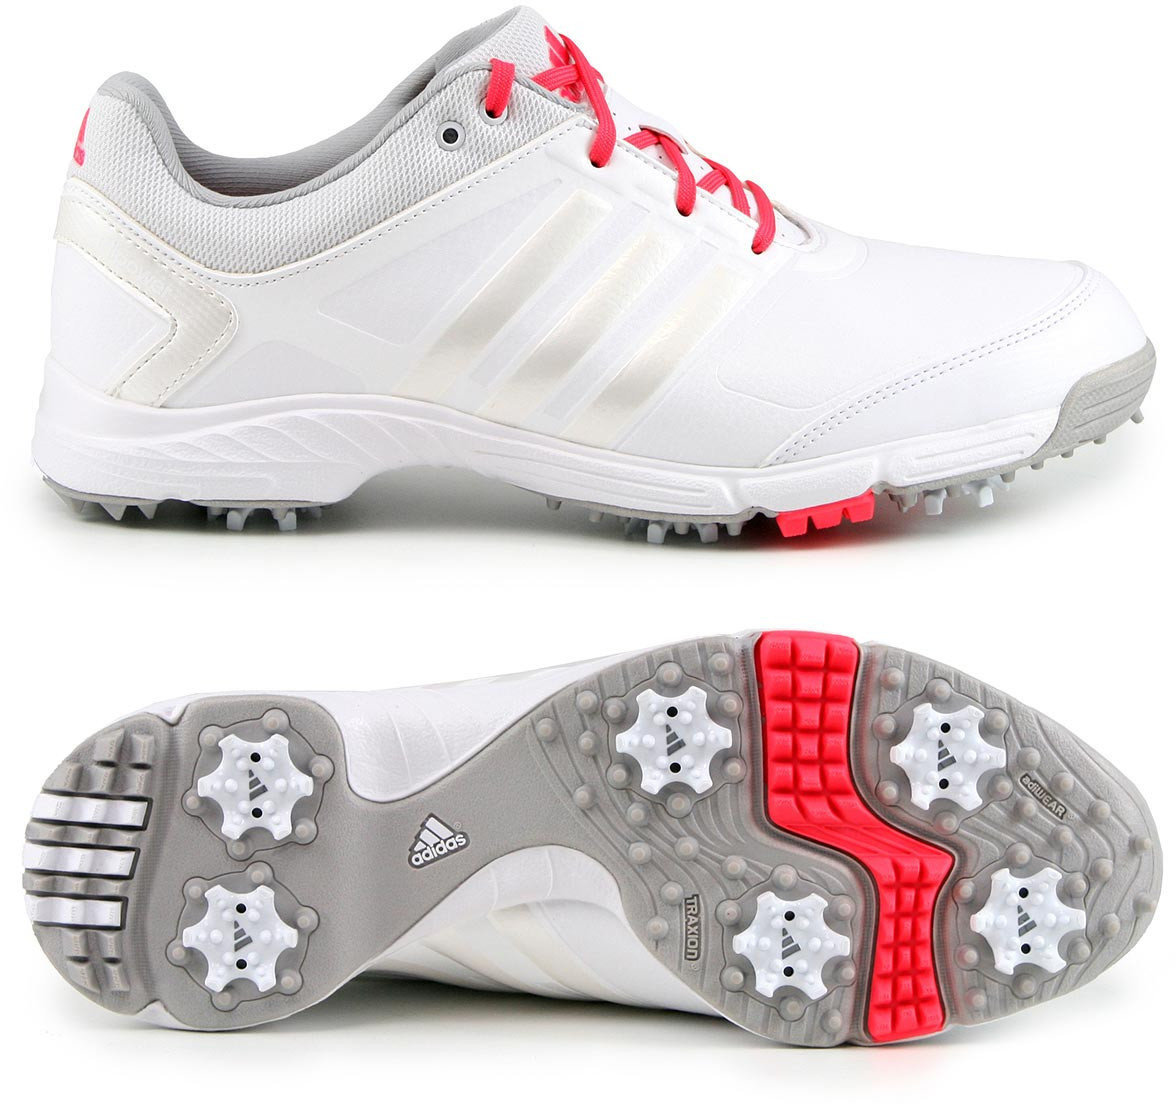 Calzado de golf de mujer Adidas Adipower Tour Mens Golf Shoes White/Metallic/Shock Red UK 4